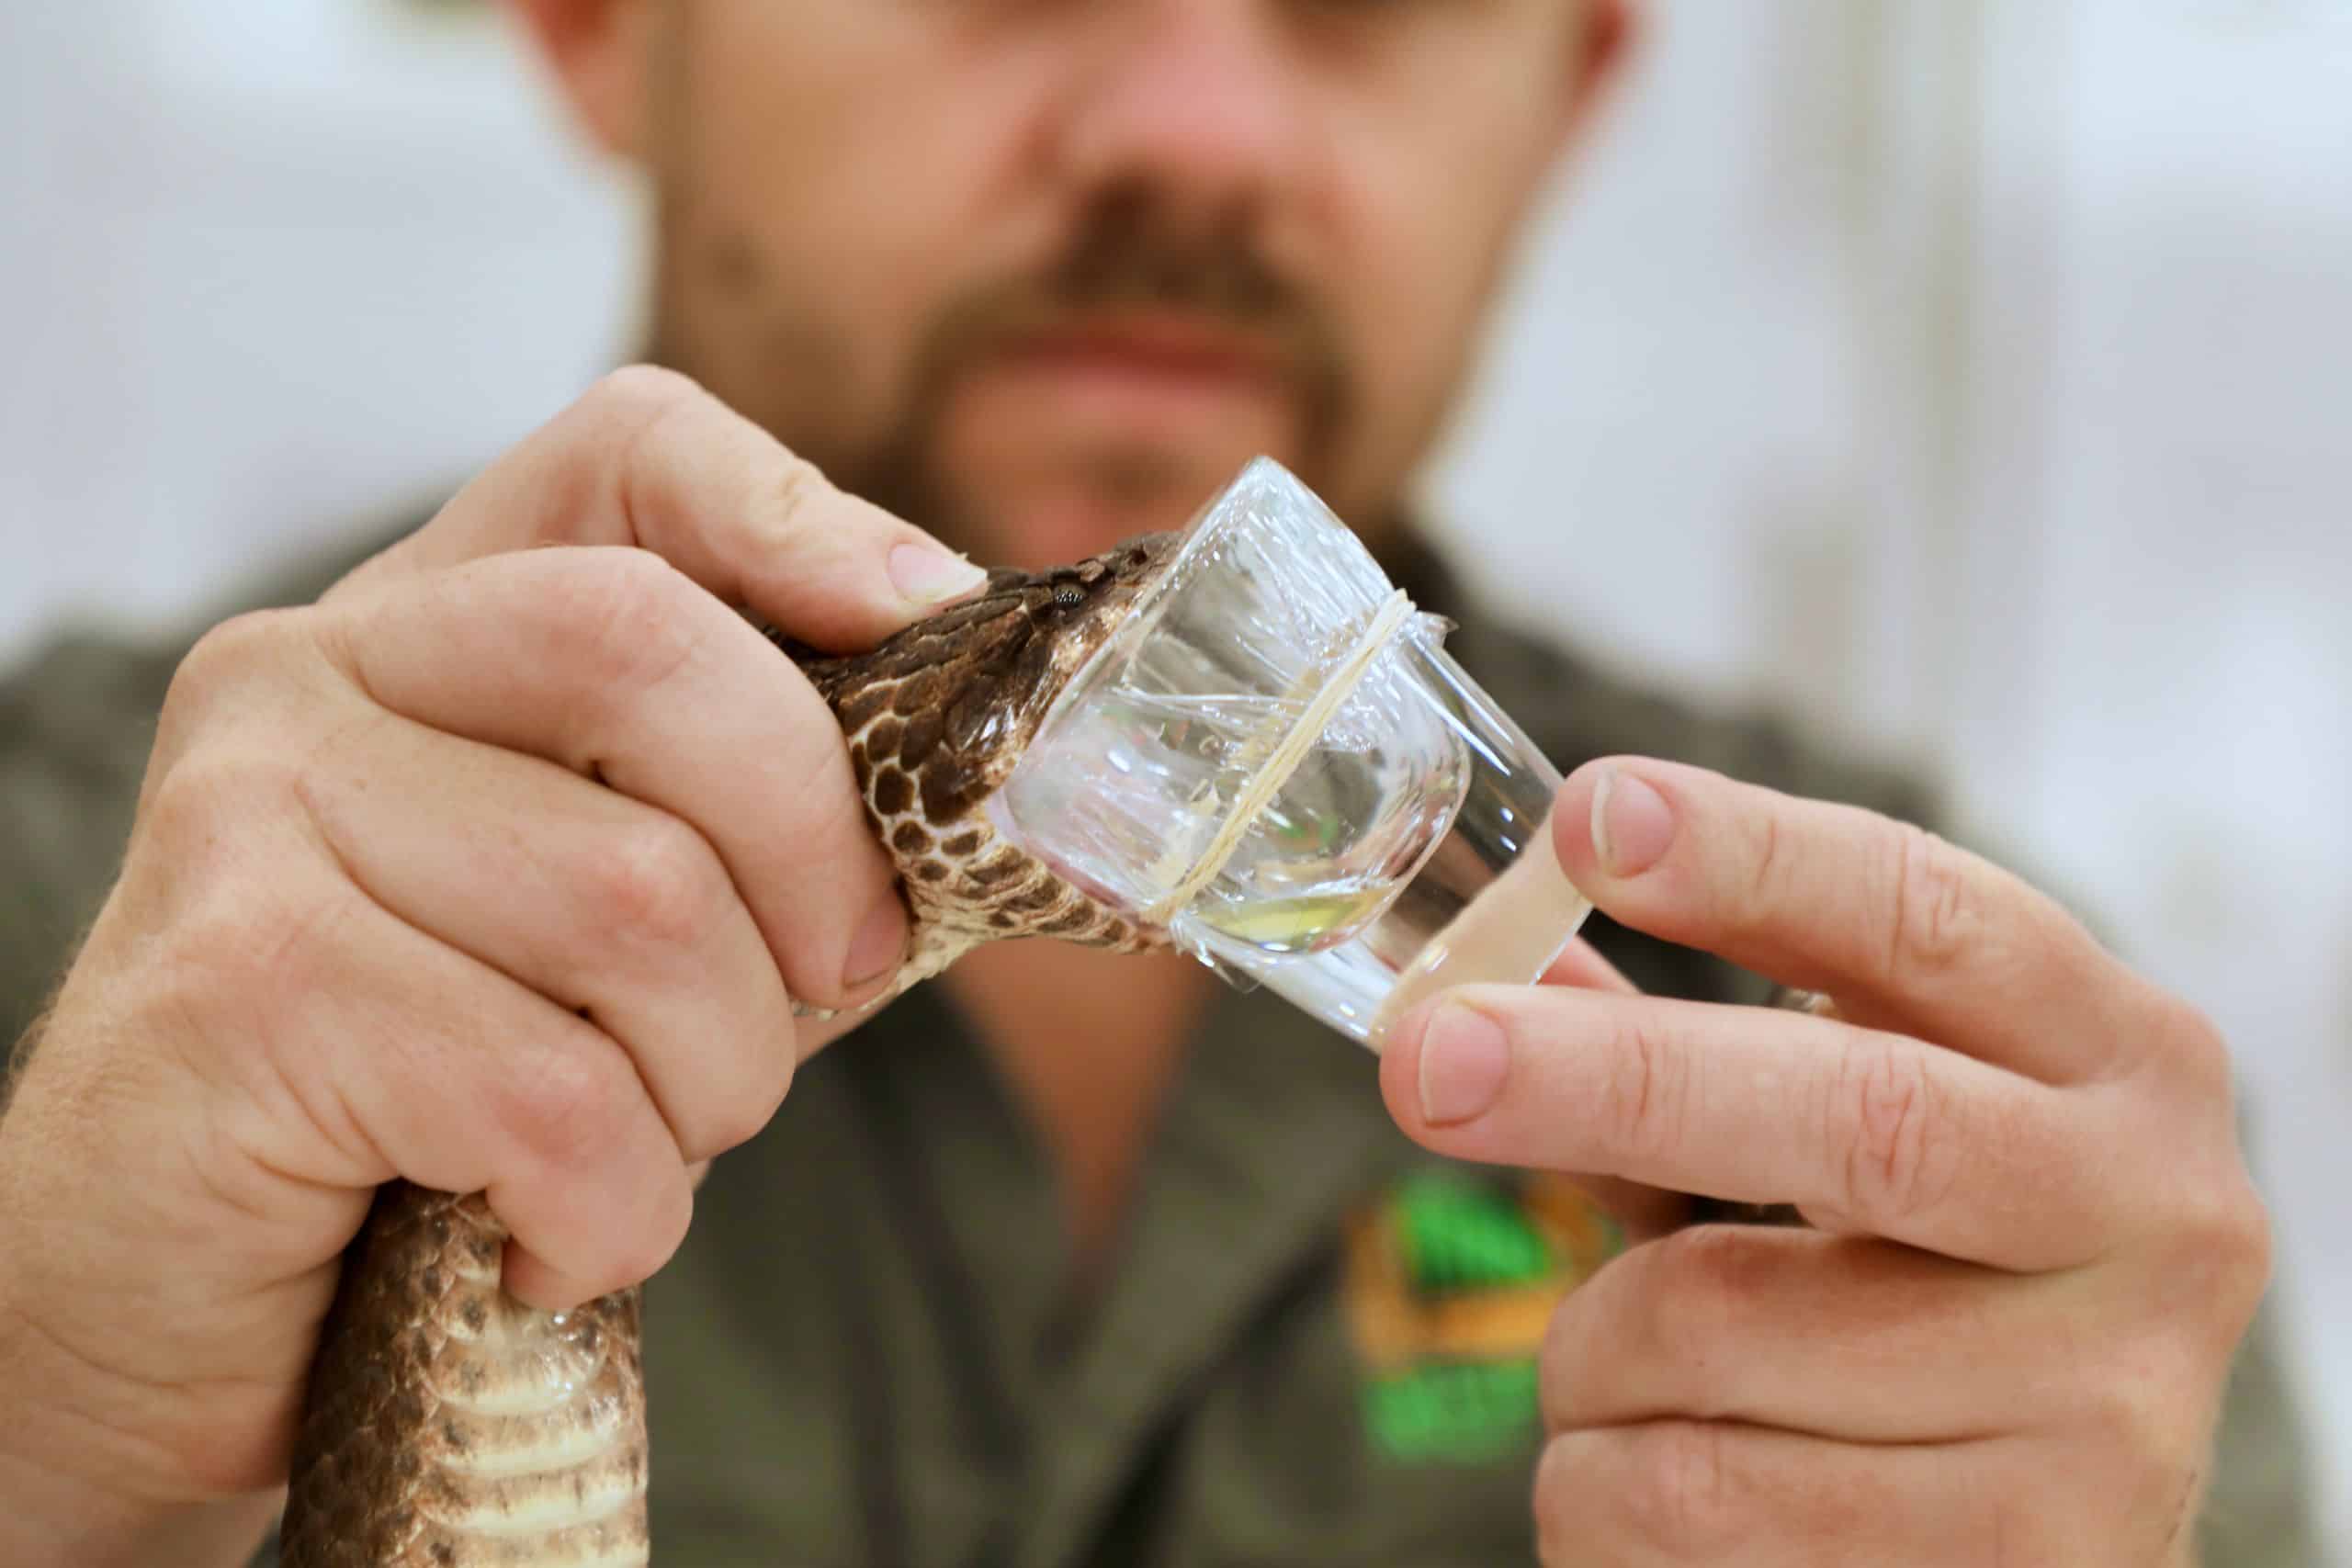 Zookeeper handling venomous snake in Venom Room animal encounter at the Australian Reptile Park